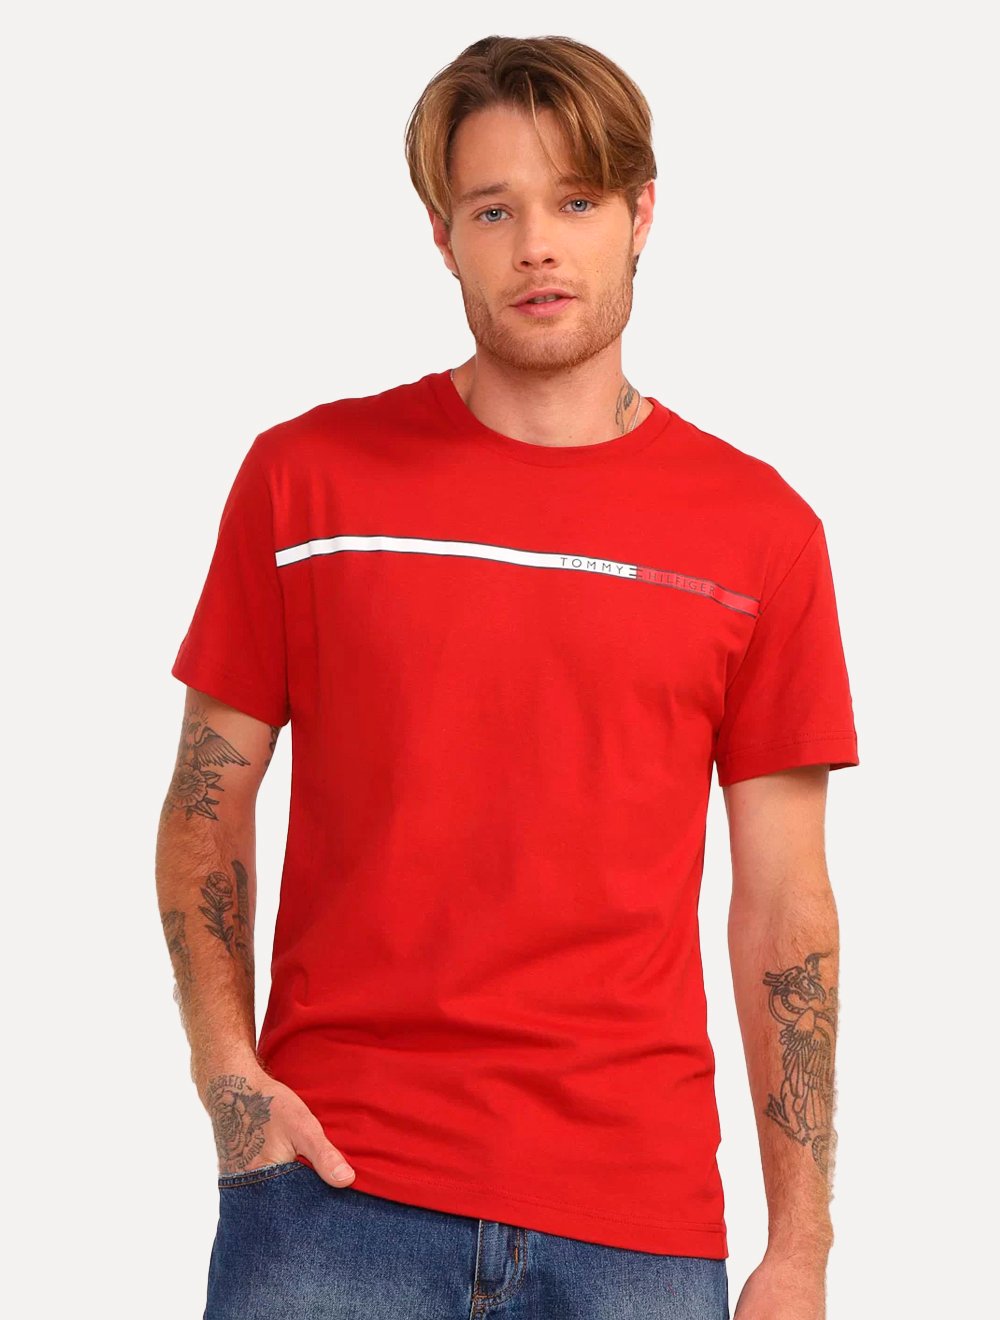 Camiseta Tommy Hilfiger Básica Masculina - Vermelho